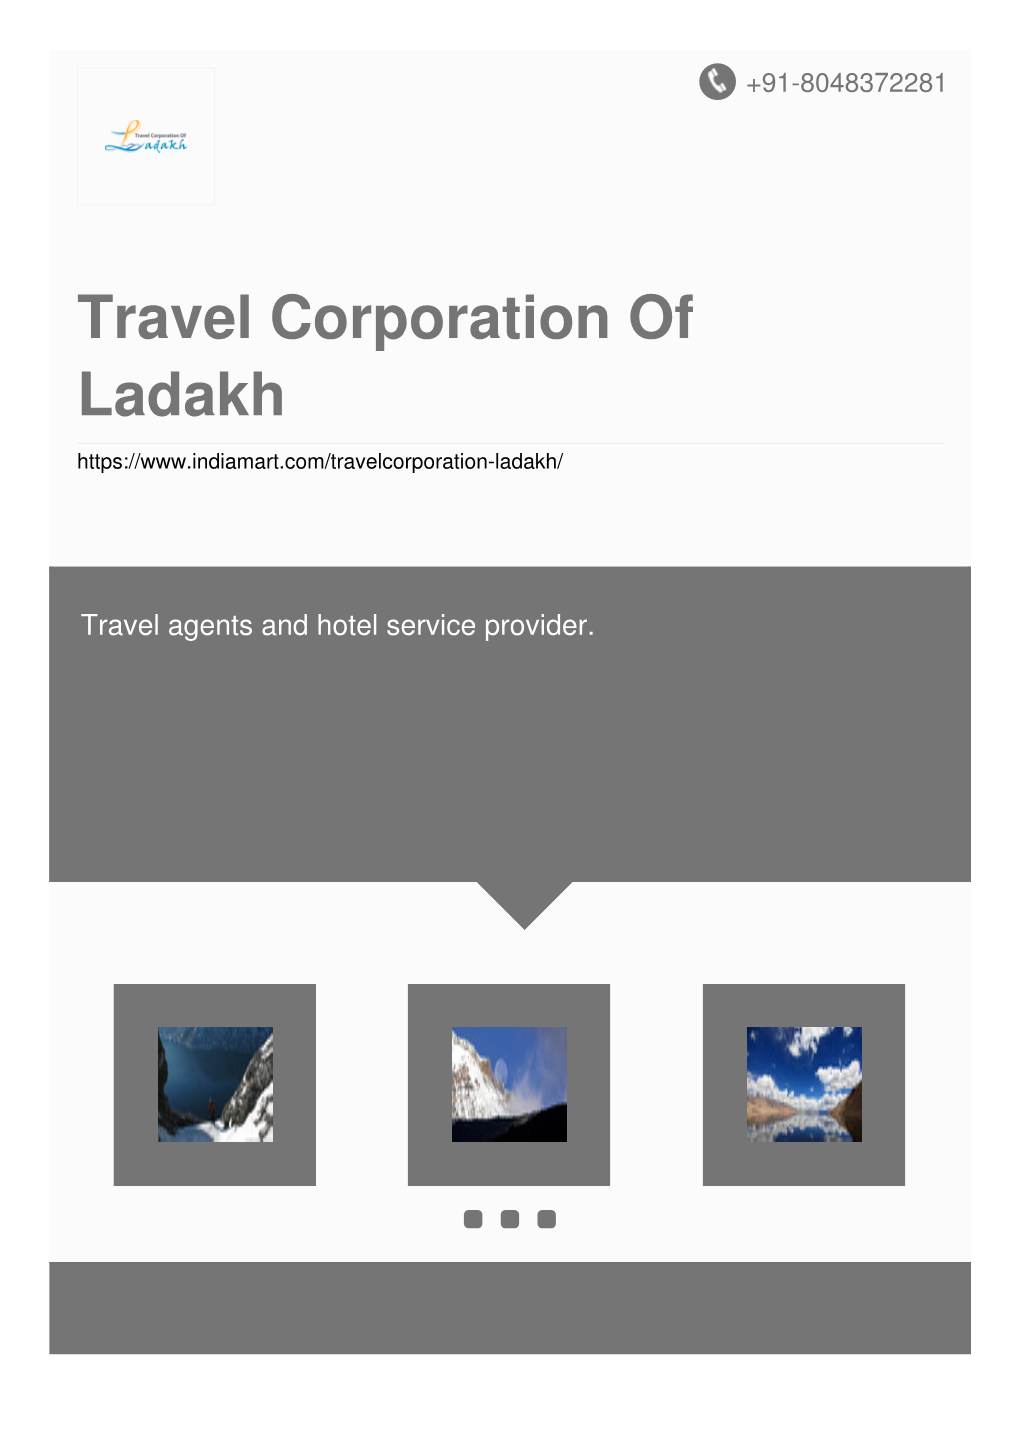 Travel Corporation of Ladakh